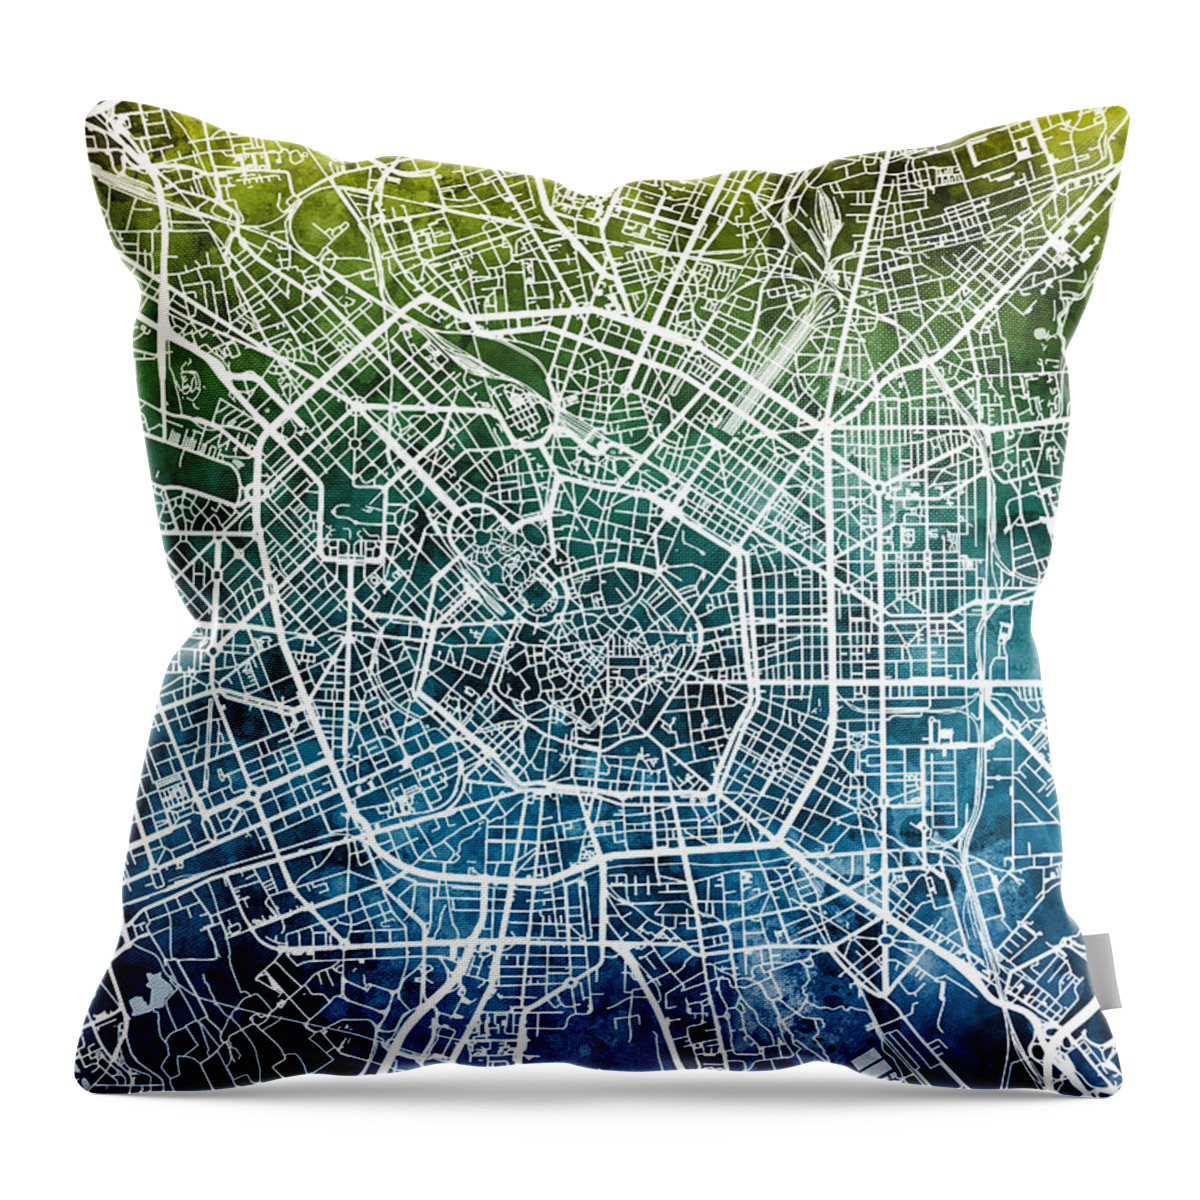 Milan Throw Pillow featuring the digital art Milan Italy City Map by Michael Tompsett